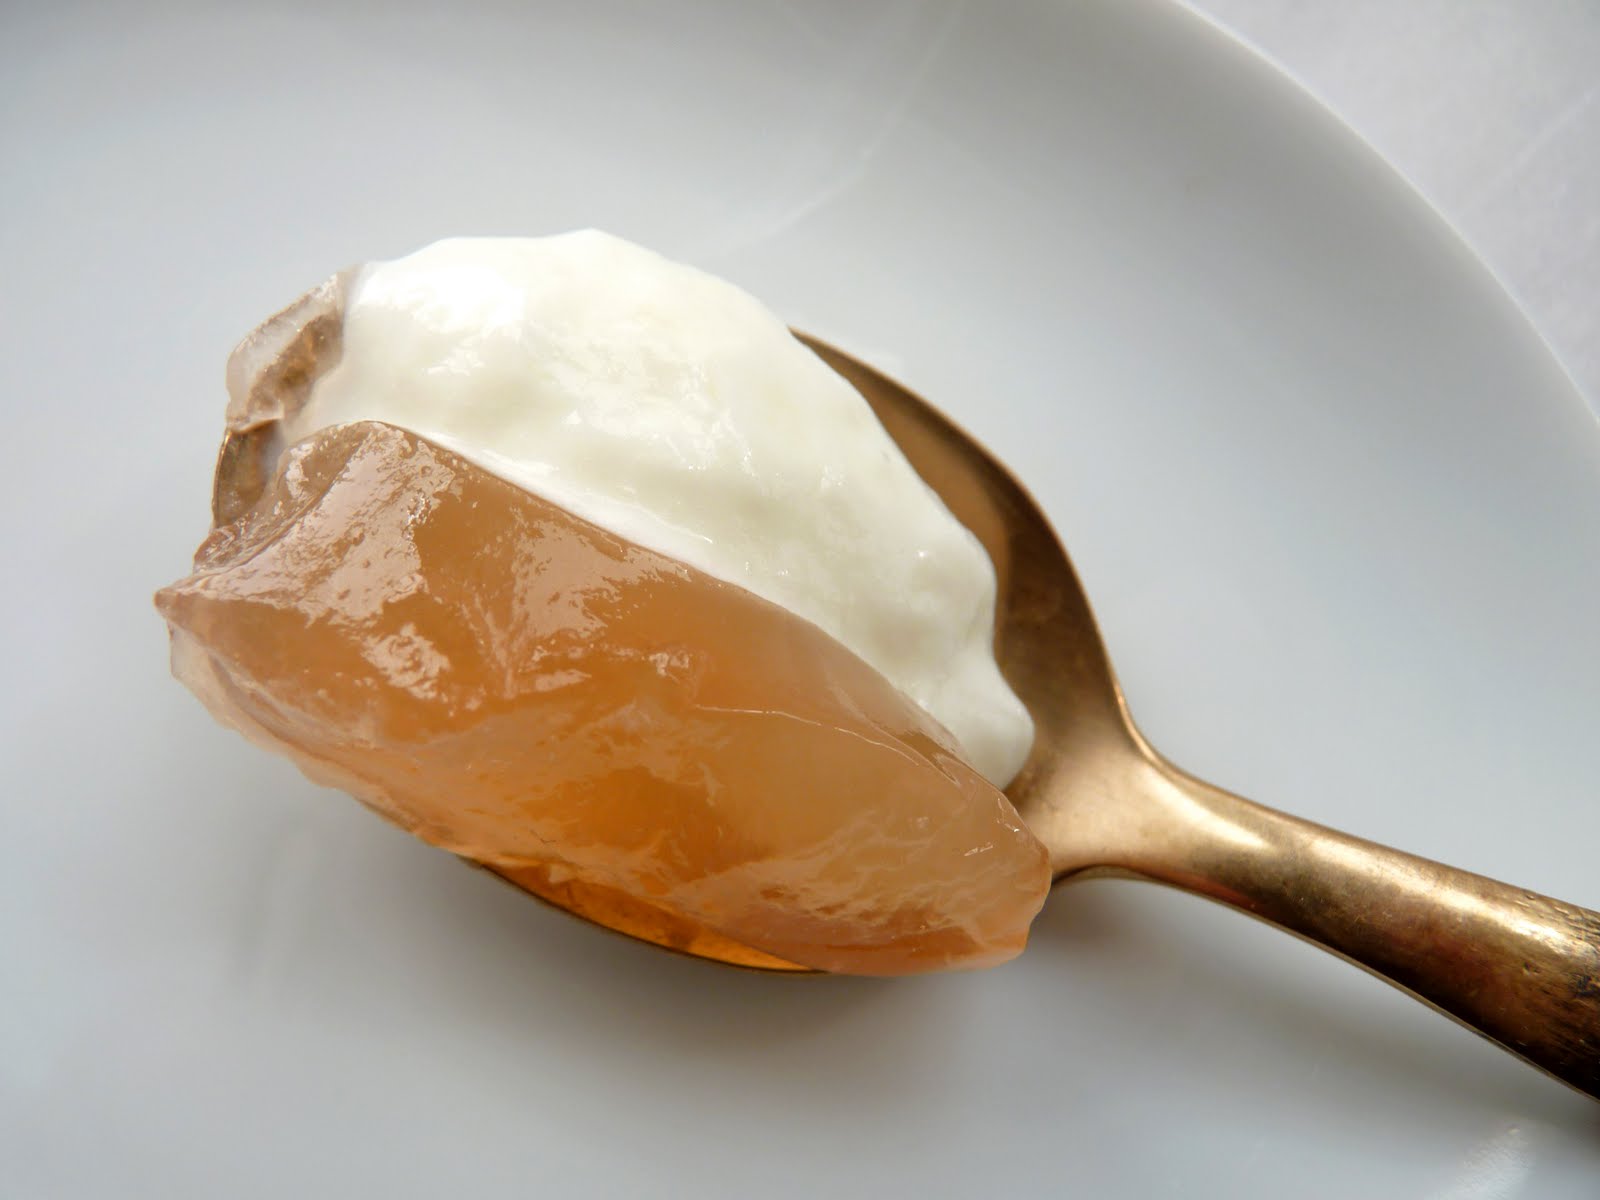 :pastry studio: Yogurt Mousse with Grapefruit Gelée